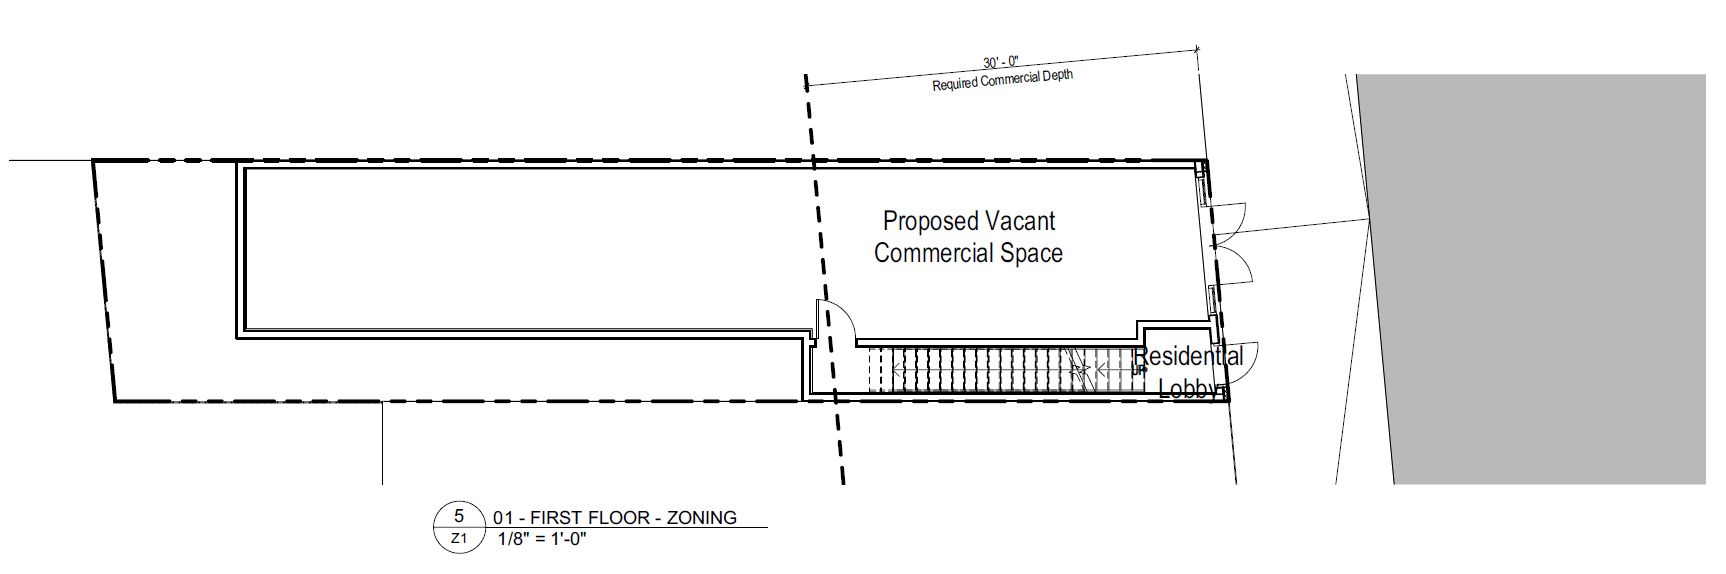 1704 Frankford Avenue. Ground floor plan. Credit: Ambit Architecture via the City of Philadelphia